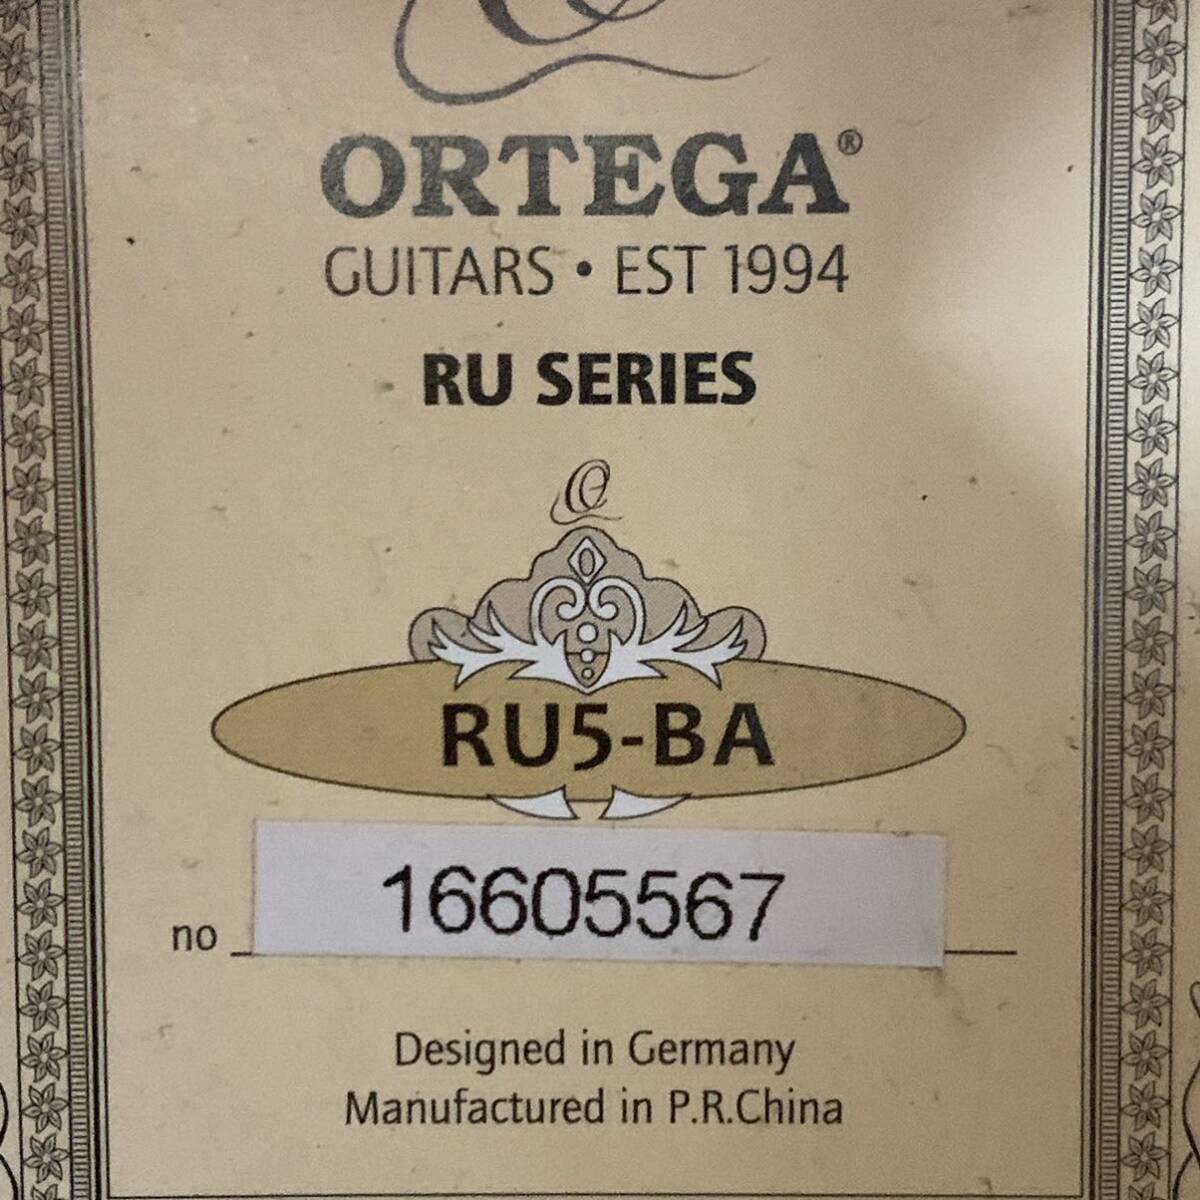 ORTEGA RU5-BA burr ton ukulele OLTE (Optical Line Transmission Equipment) ga